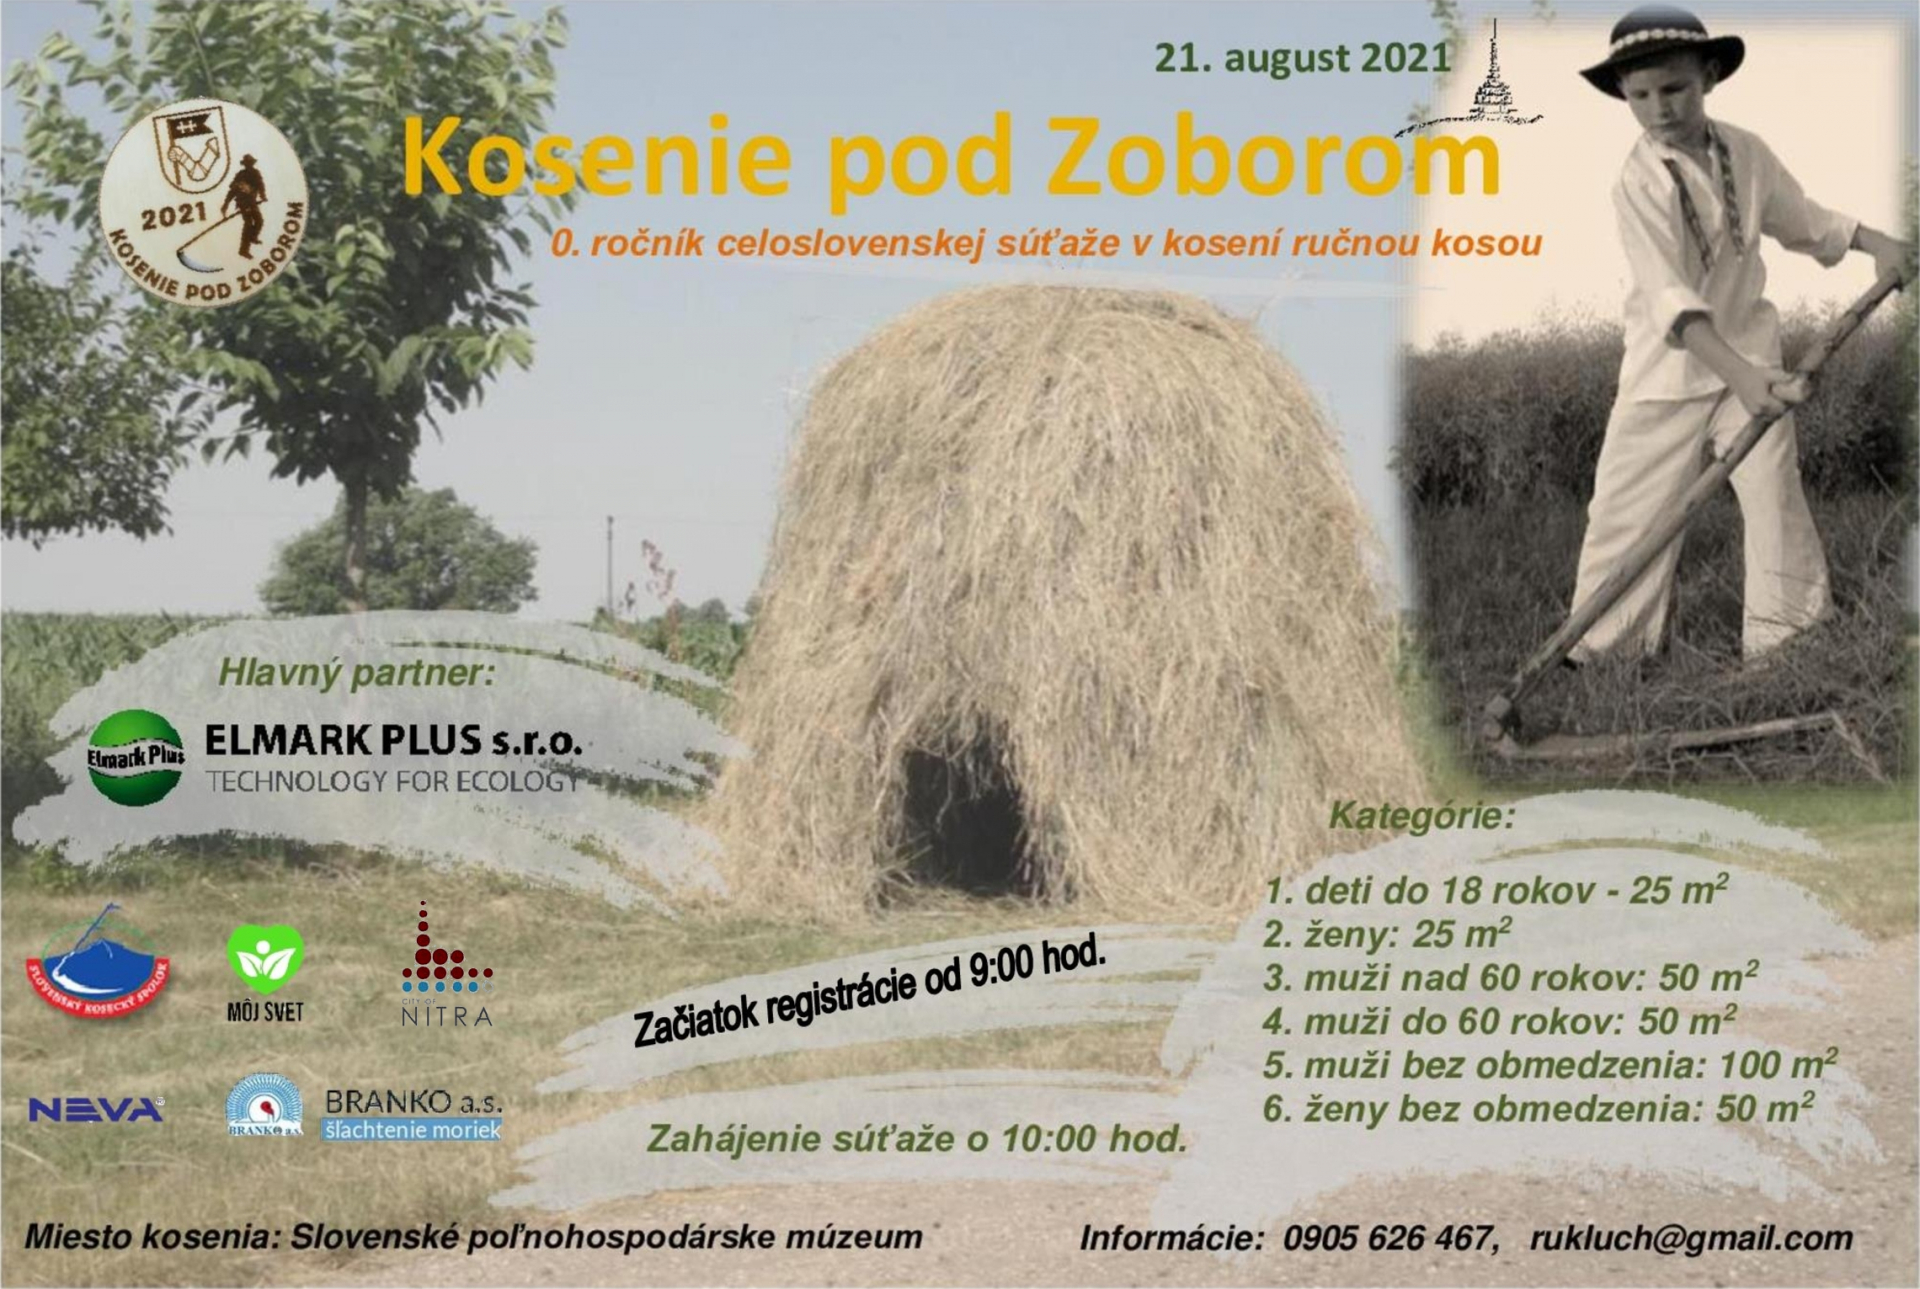 NOV - - - Kosenie pod Zoborom 2021 Nitra - 0. ronk celoslovenskej sae kosenie runou kosou